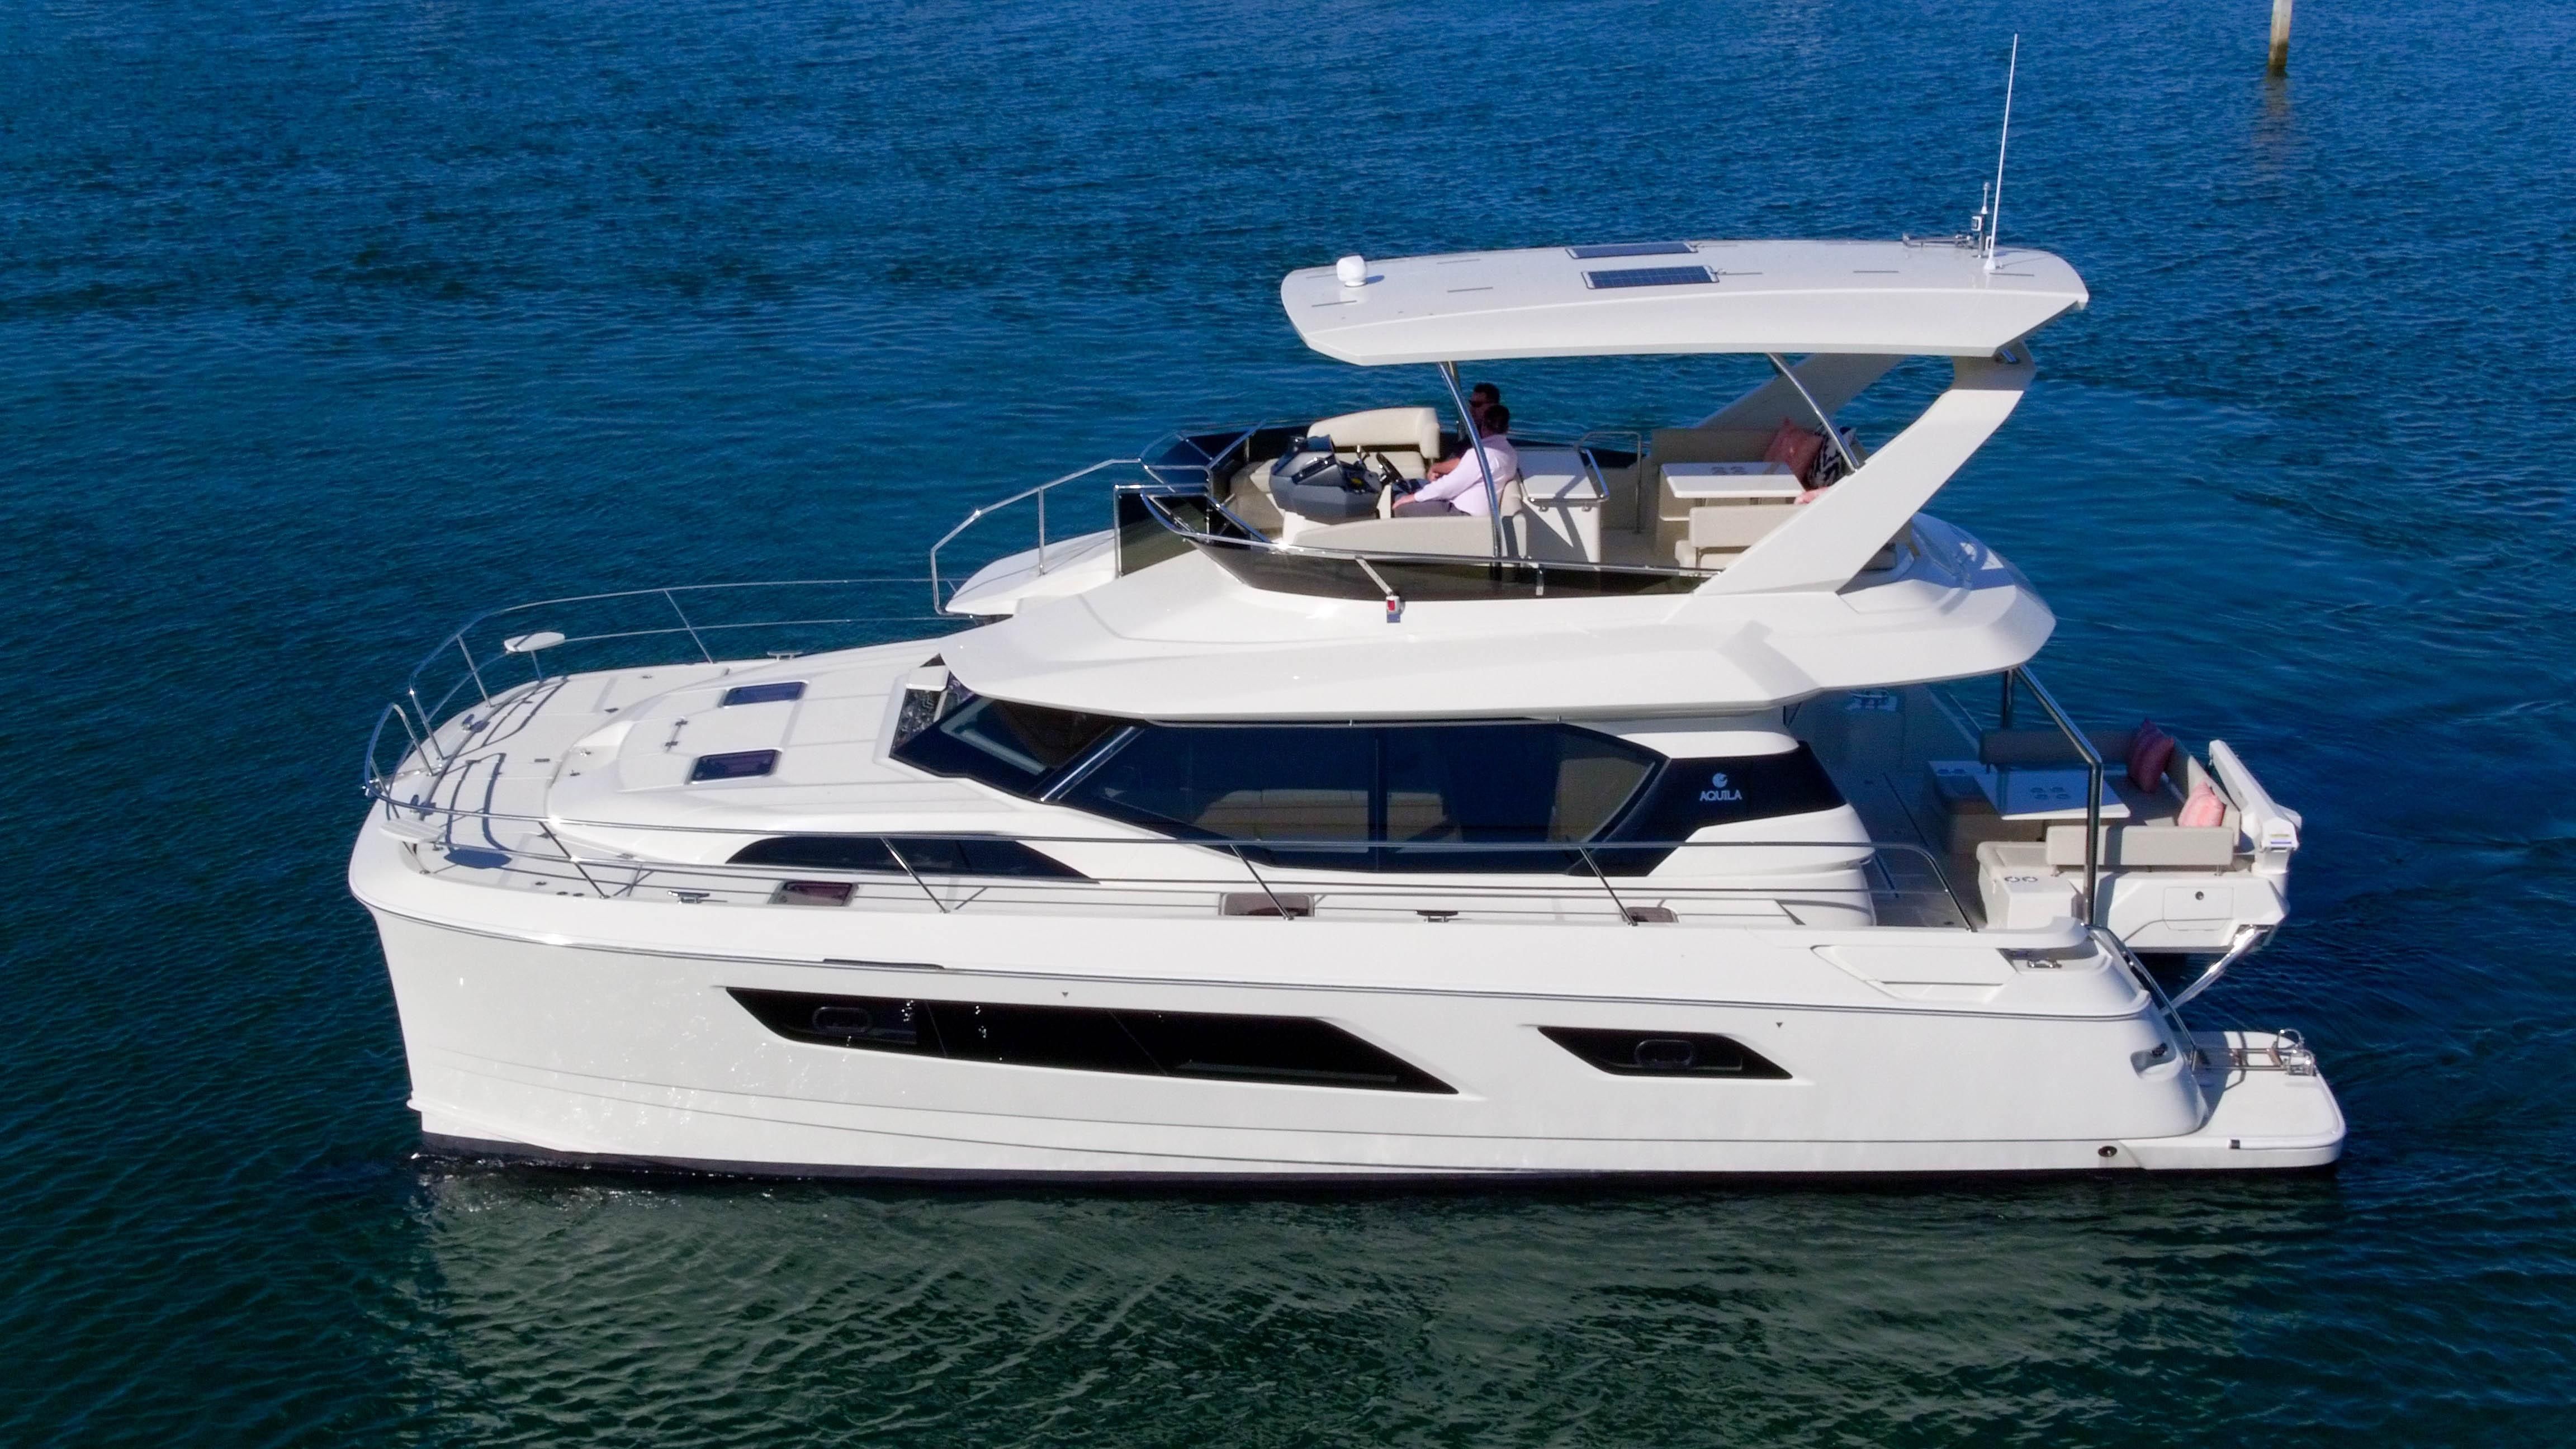 2018 aquila 44 power catamaran for sale - yachtworld